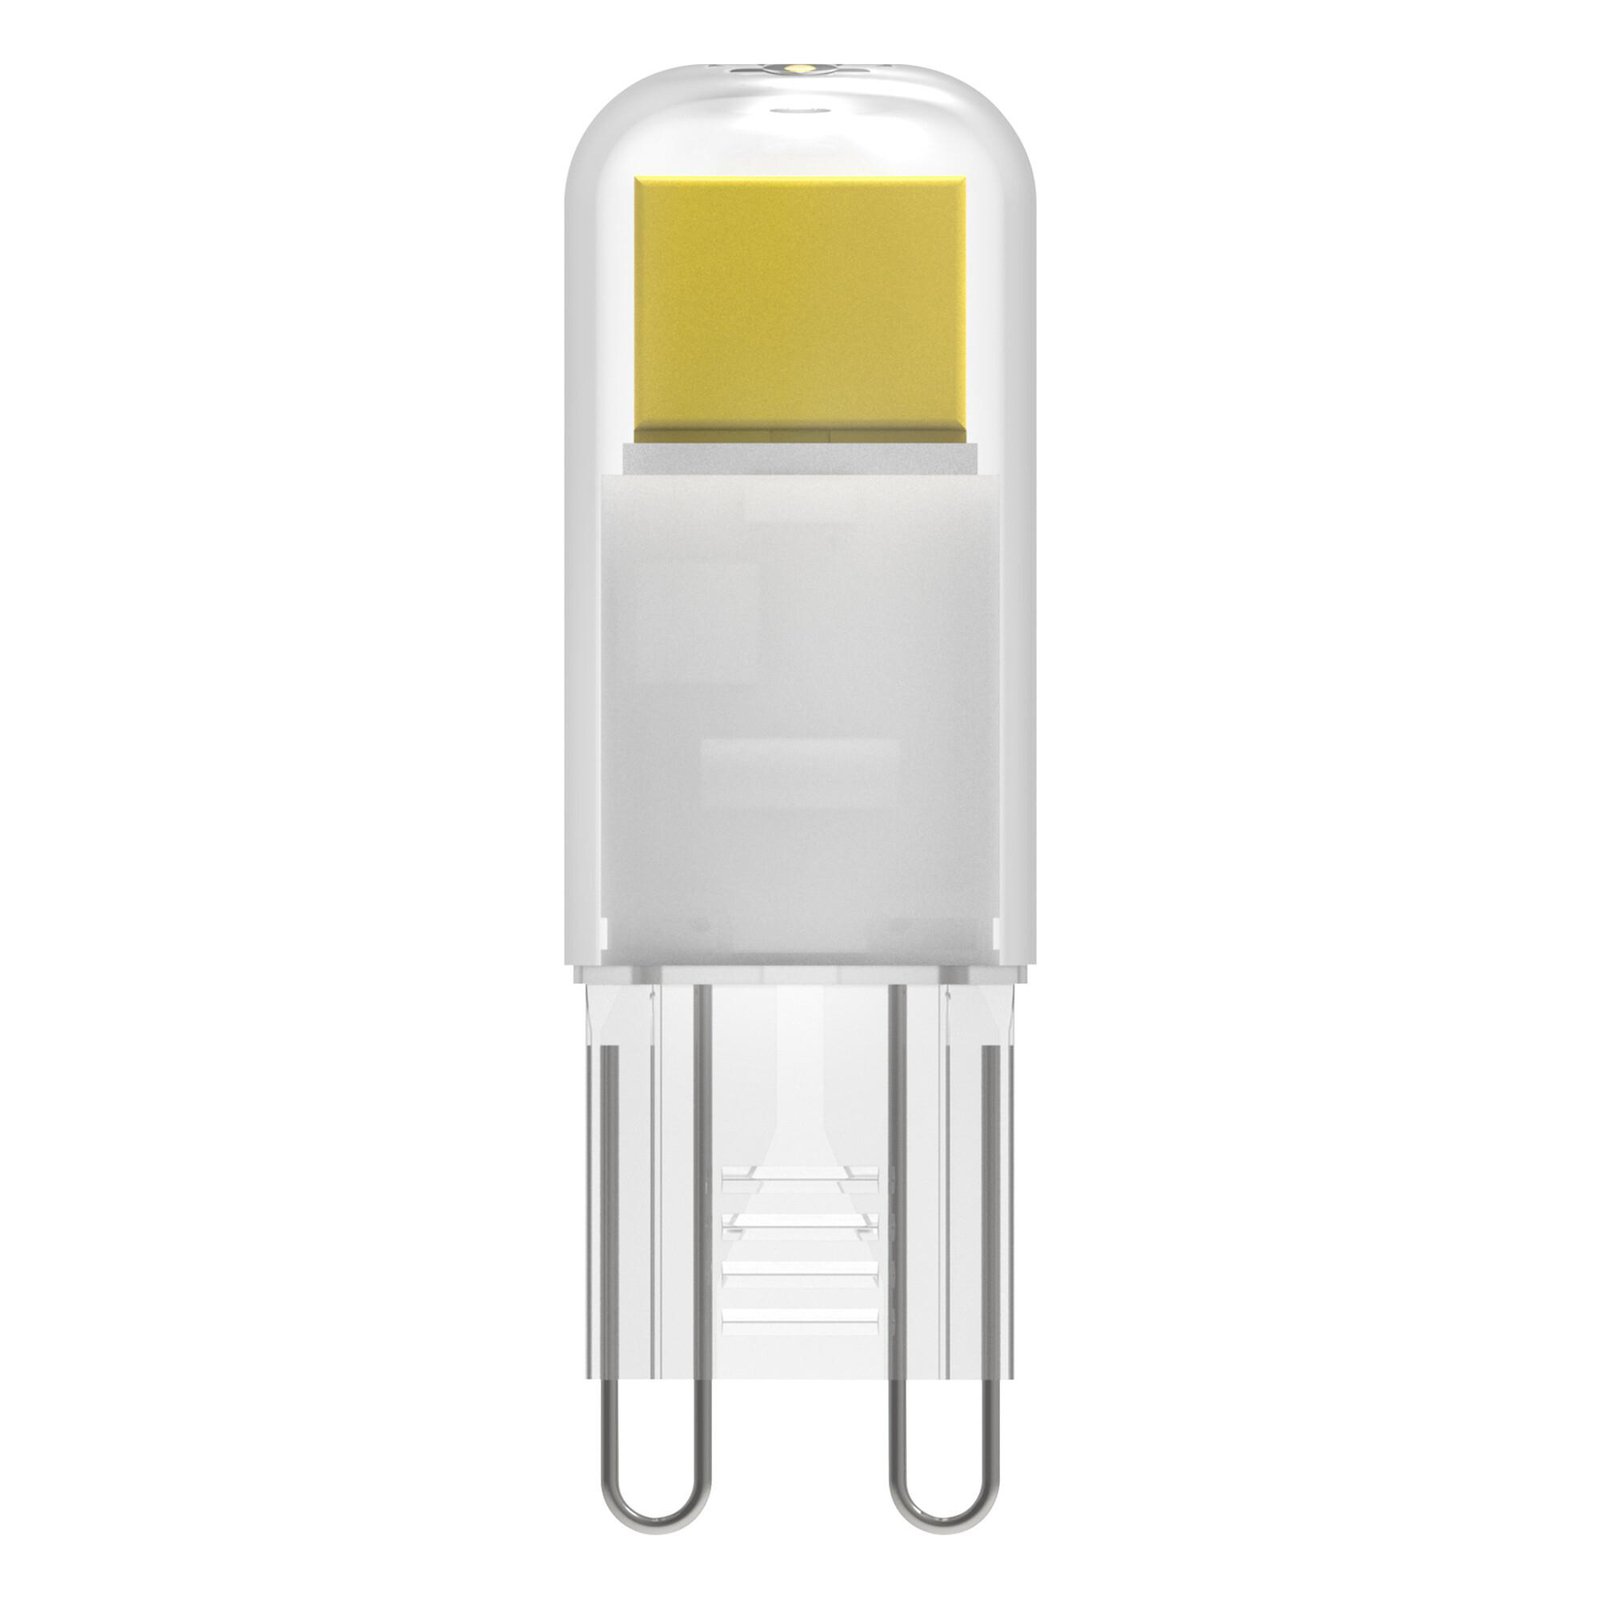 OSRAM LED bi-pin bulb G9 1.8 W clear 2,700 K